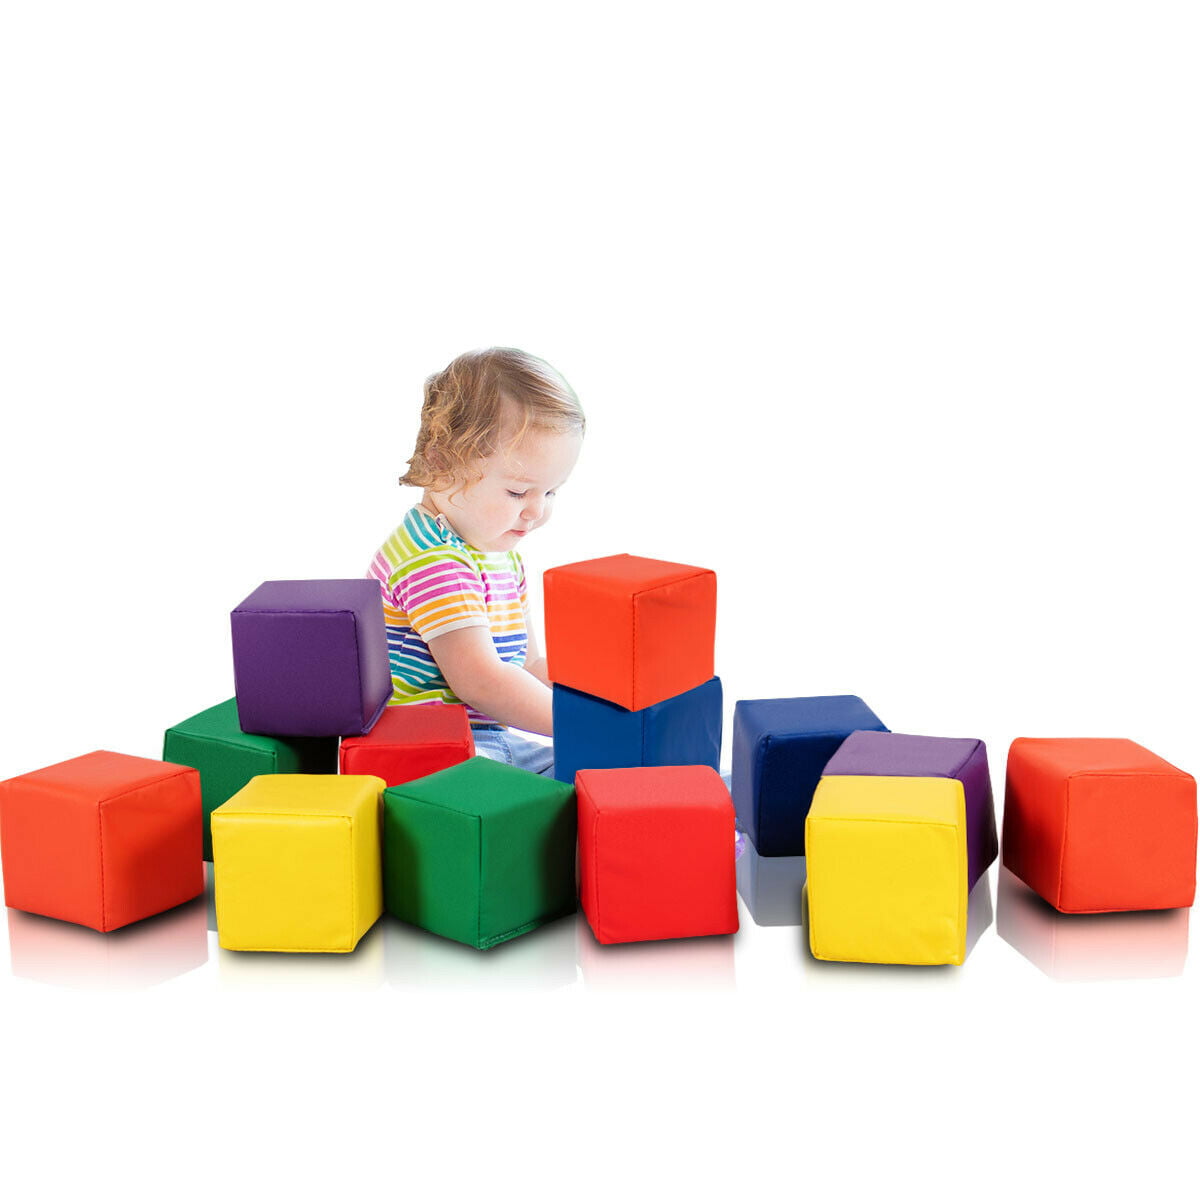 building blocks for toddlers walmart